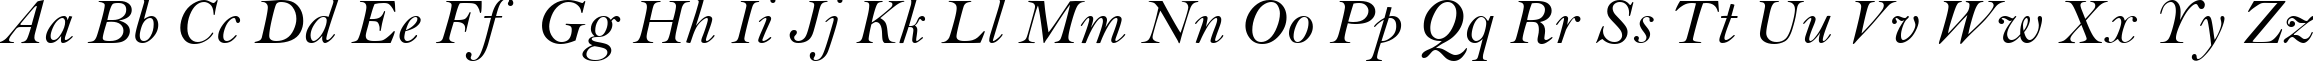 Пример написания английского алфавита шрифтом Bell MT Italic